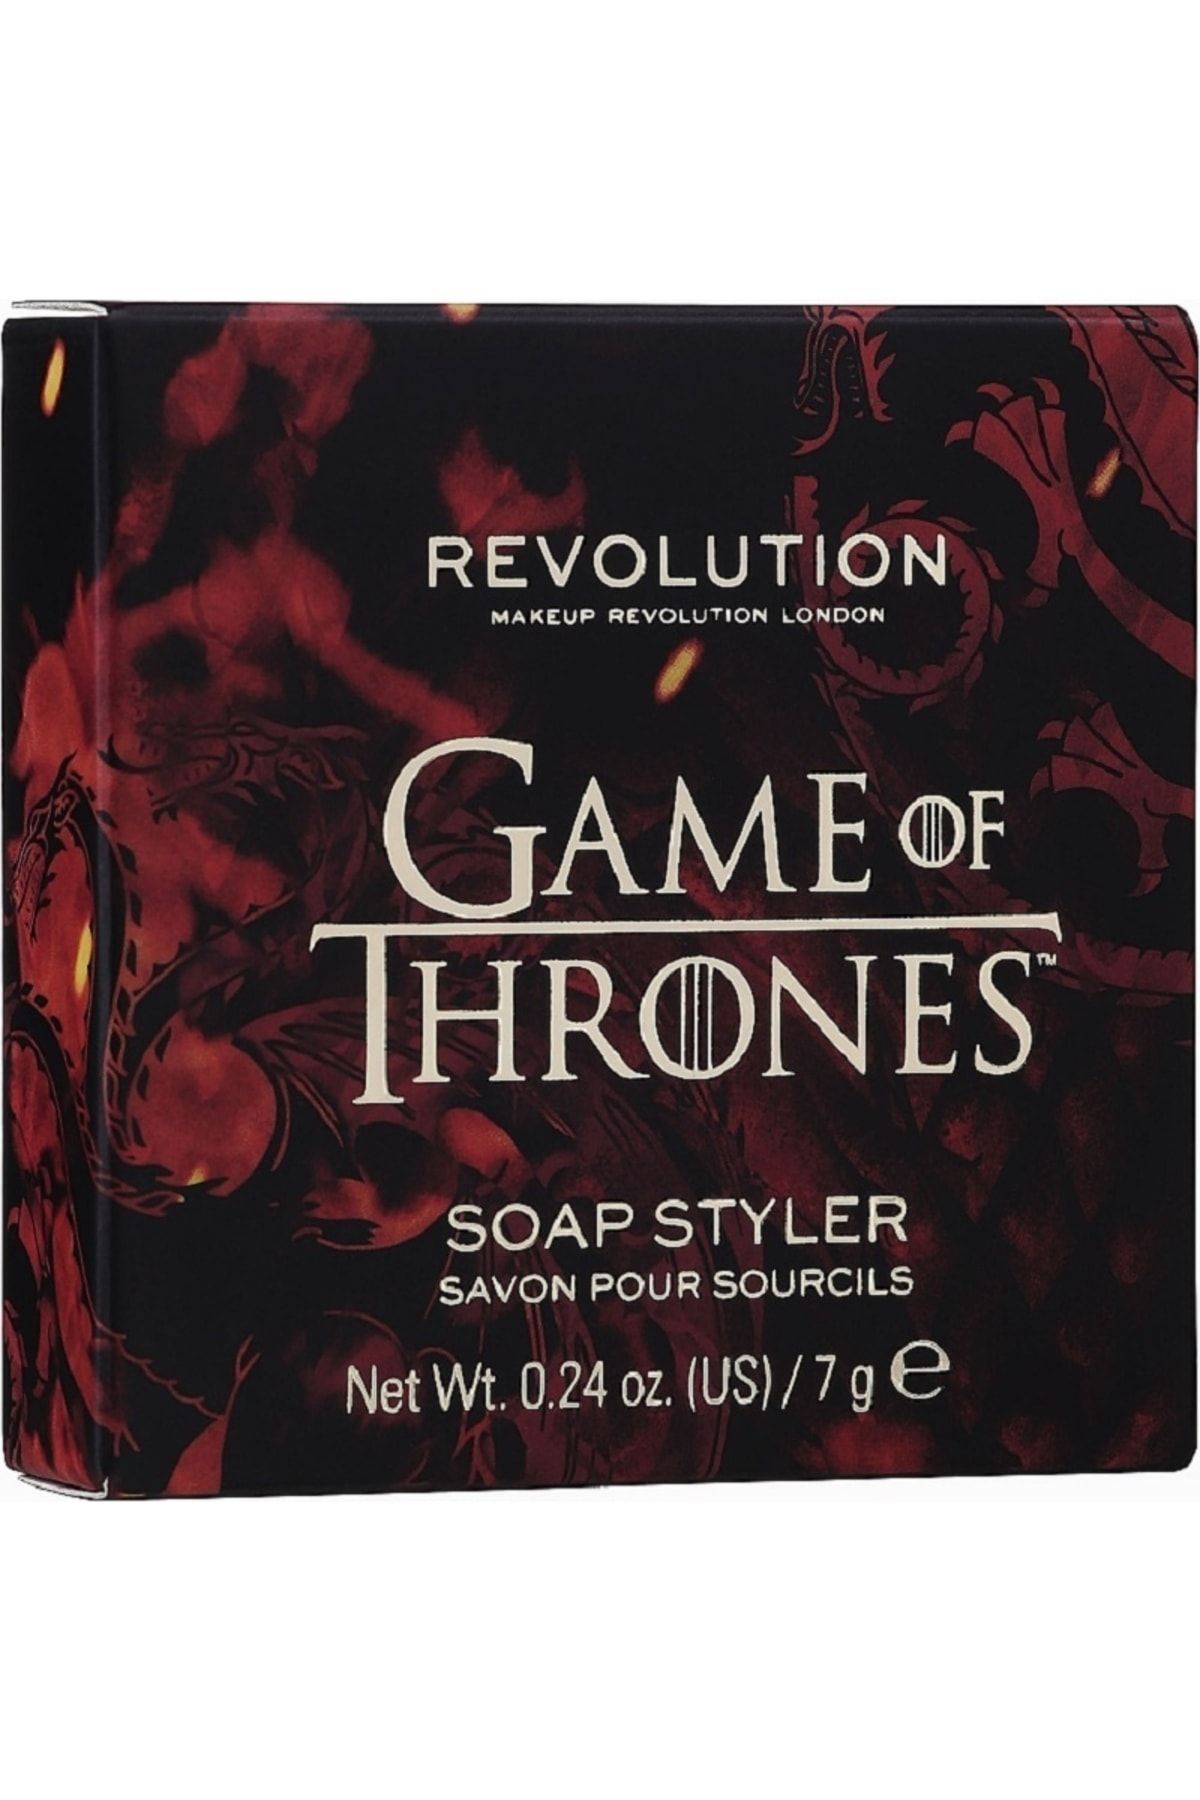 Revolution X Game Of Thrones Soap Styler